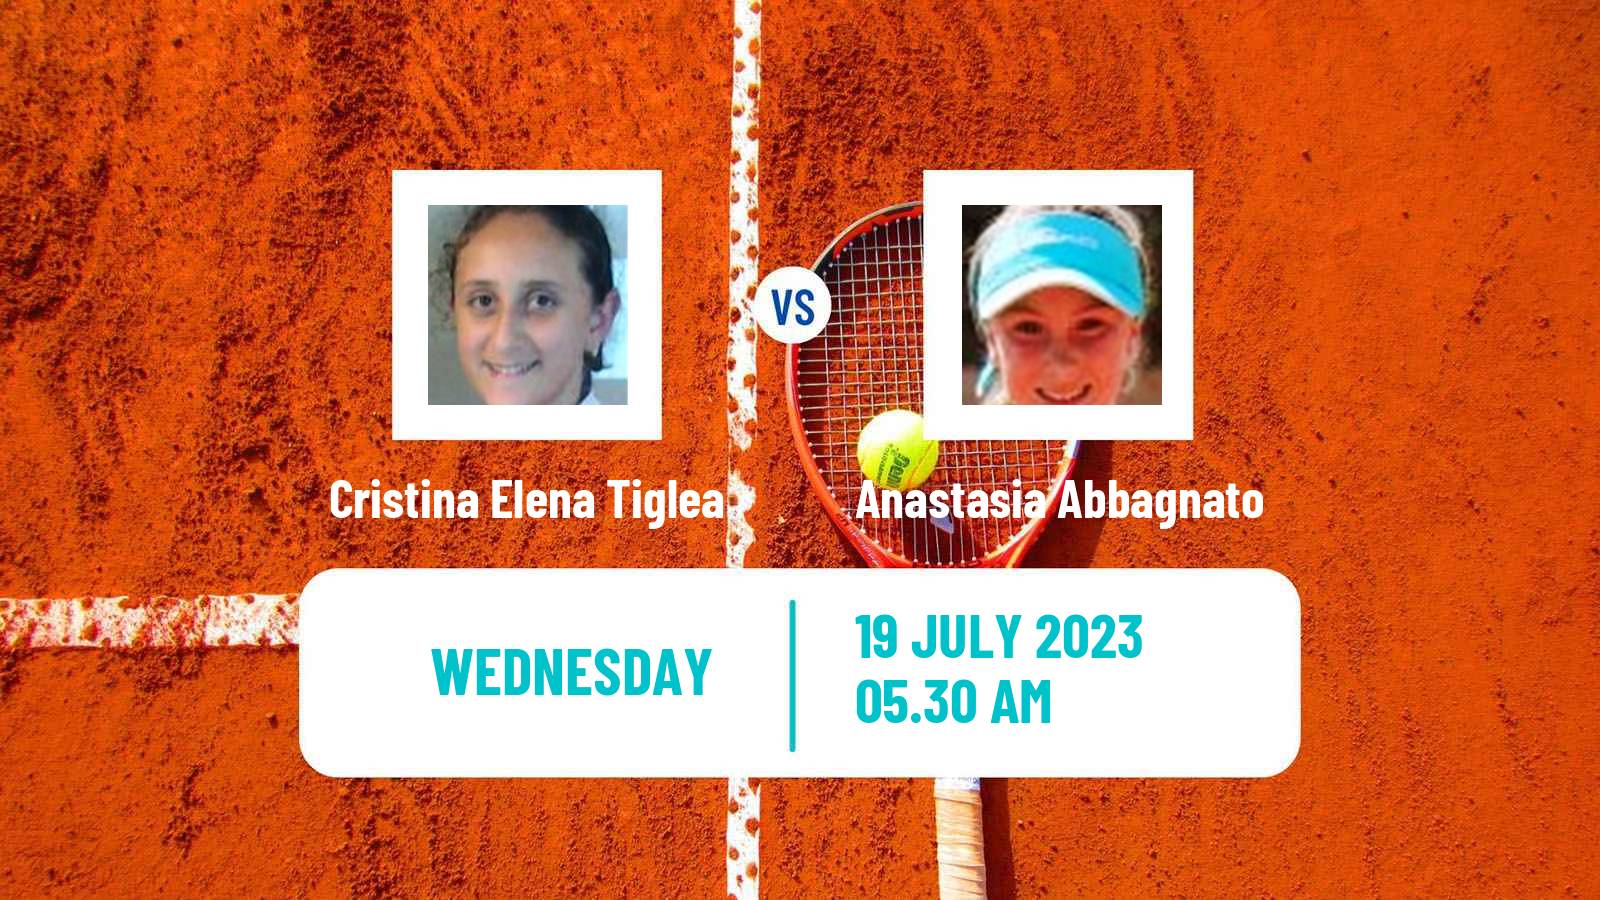 Tennis ITF W15 Monastir 24 Women Cristina Elena Tiglea - Anastasia Abbagnato